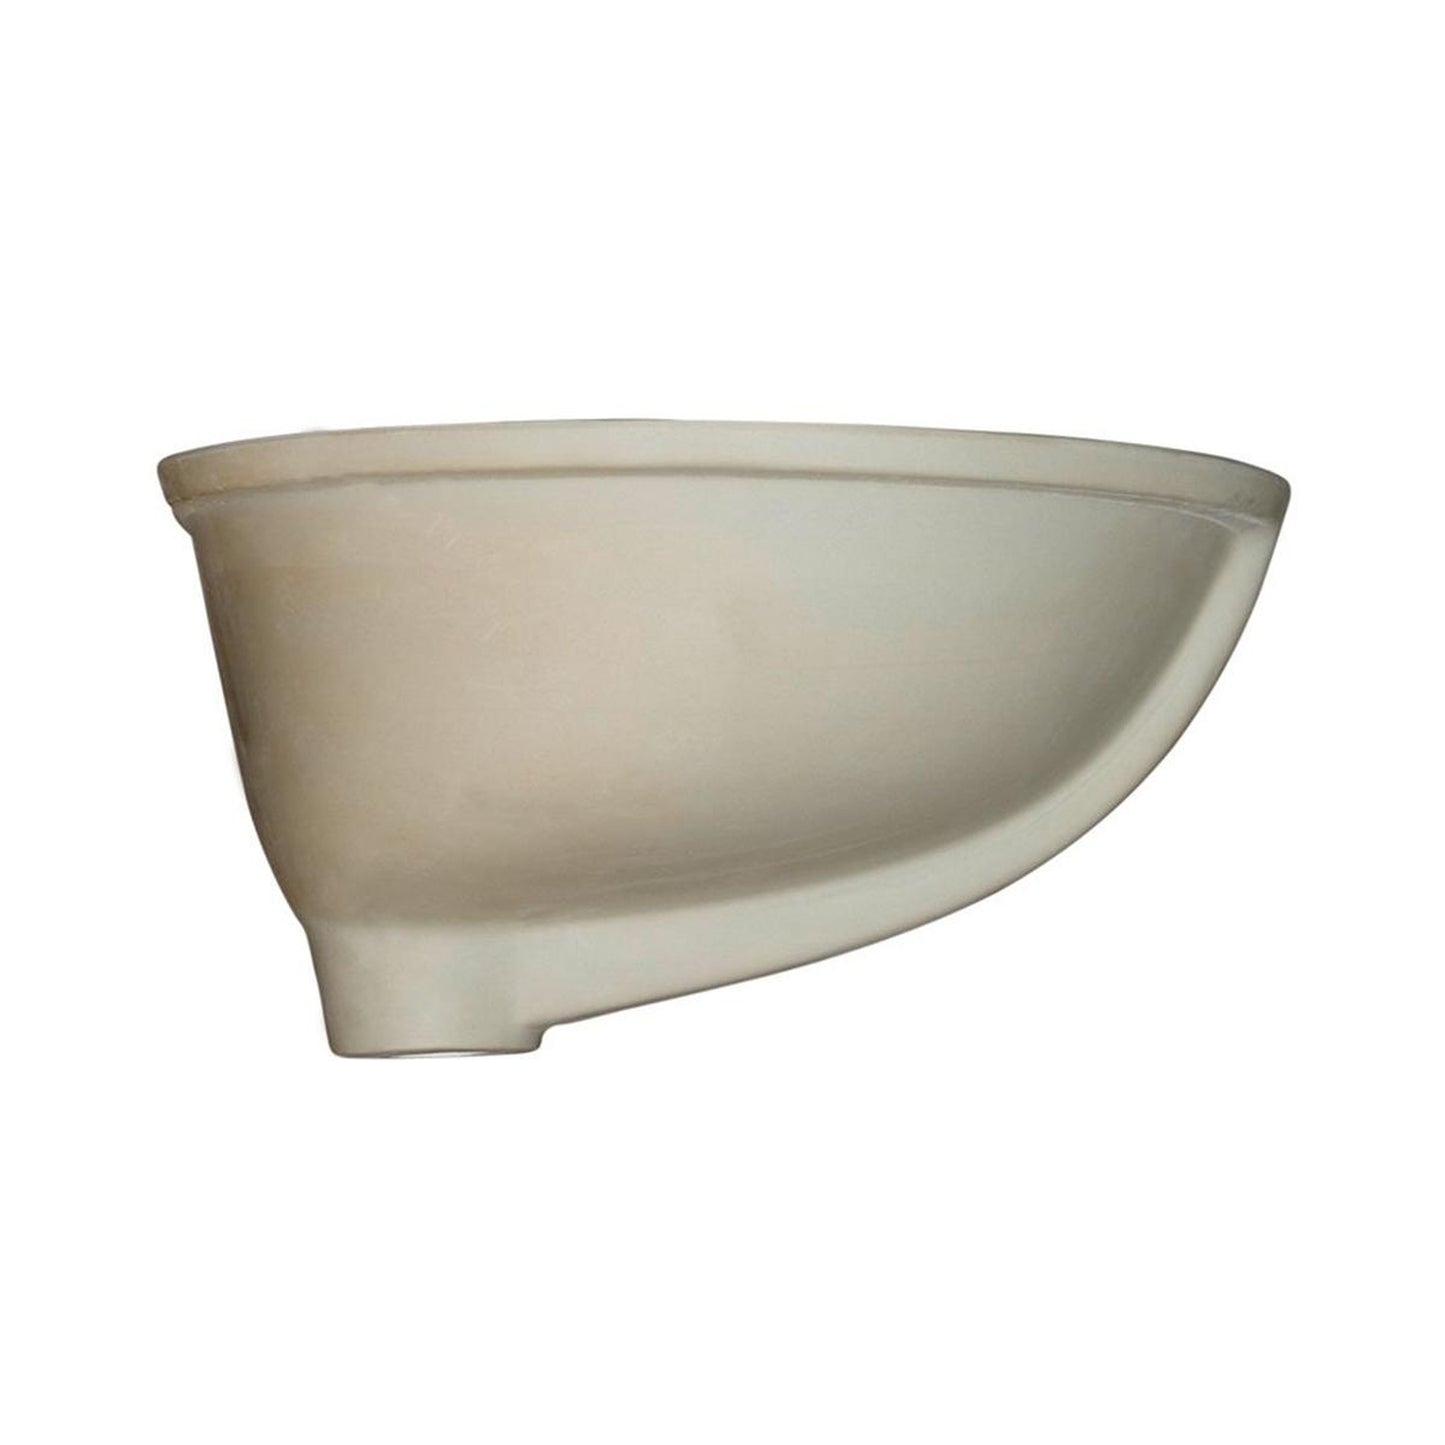 Pelican Int'l Pearl Series PL-3072 15 1/4" x 12" White Porcelain Undermount Bathroom Sink